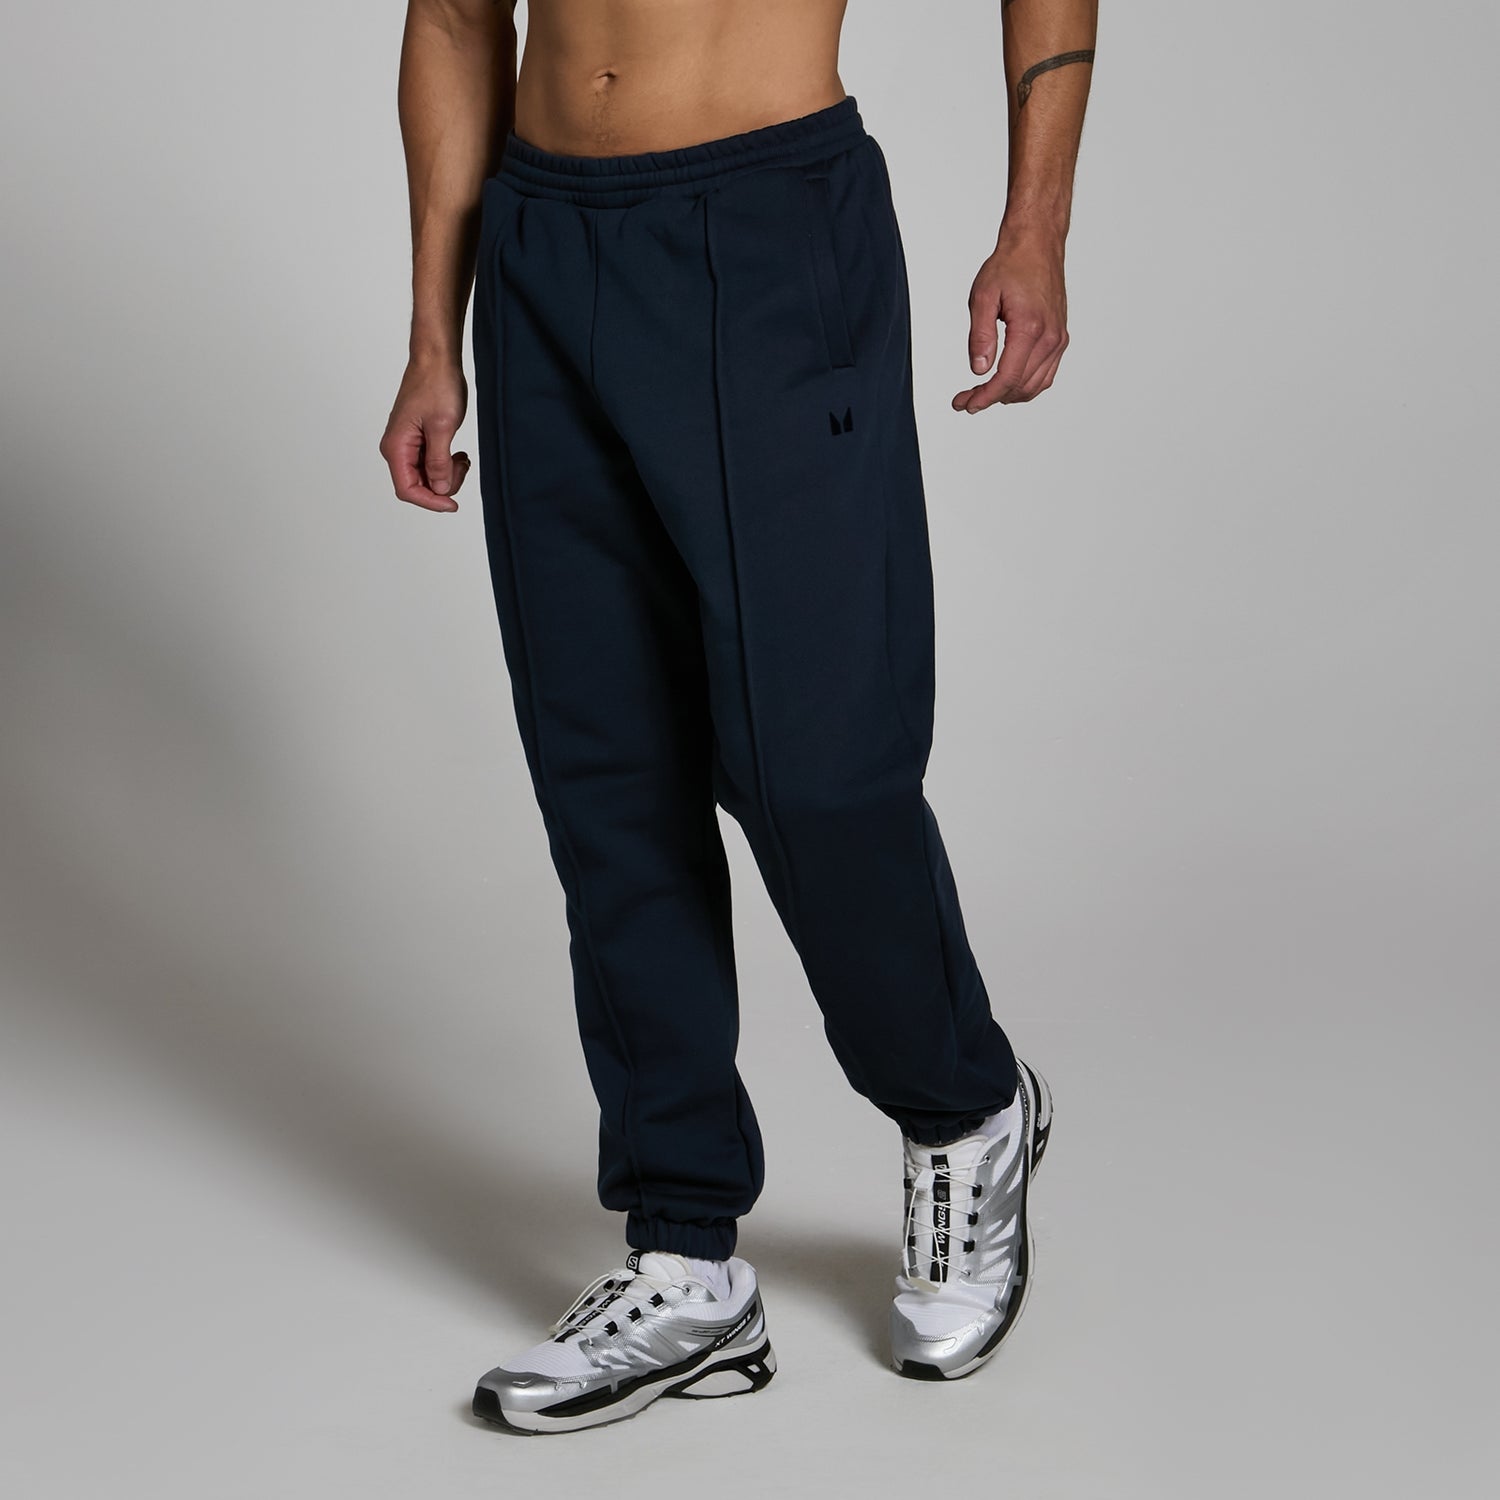 MP男士Lifestyle生活方式系列超大版型运动裤 - 深海军蓝 - XS